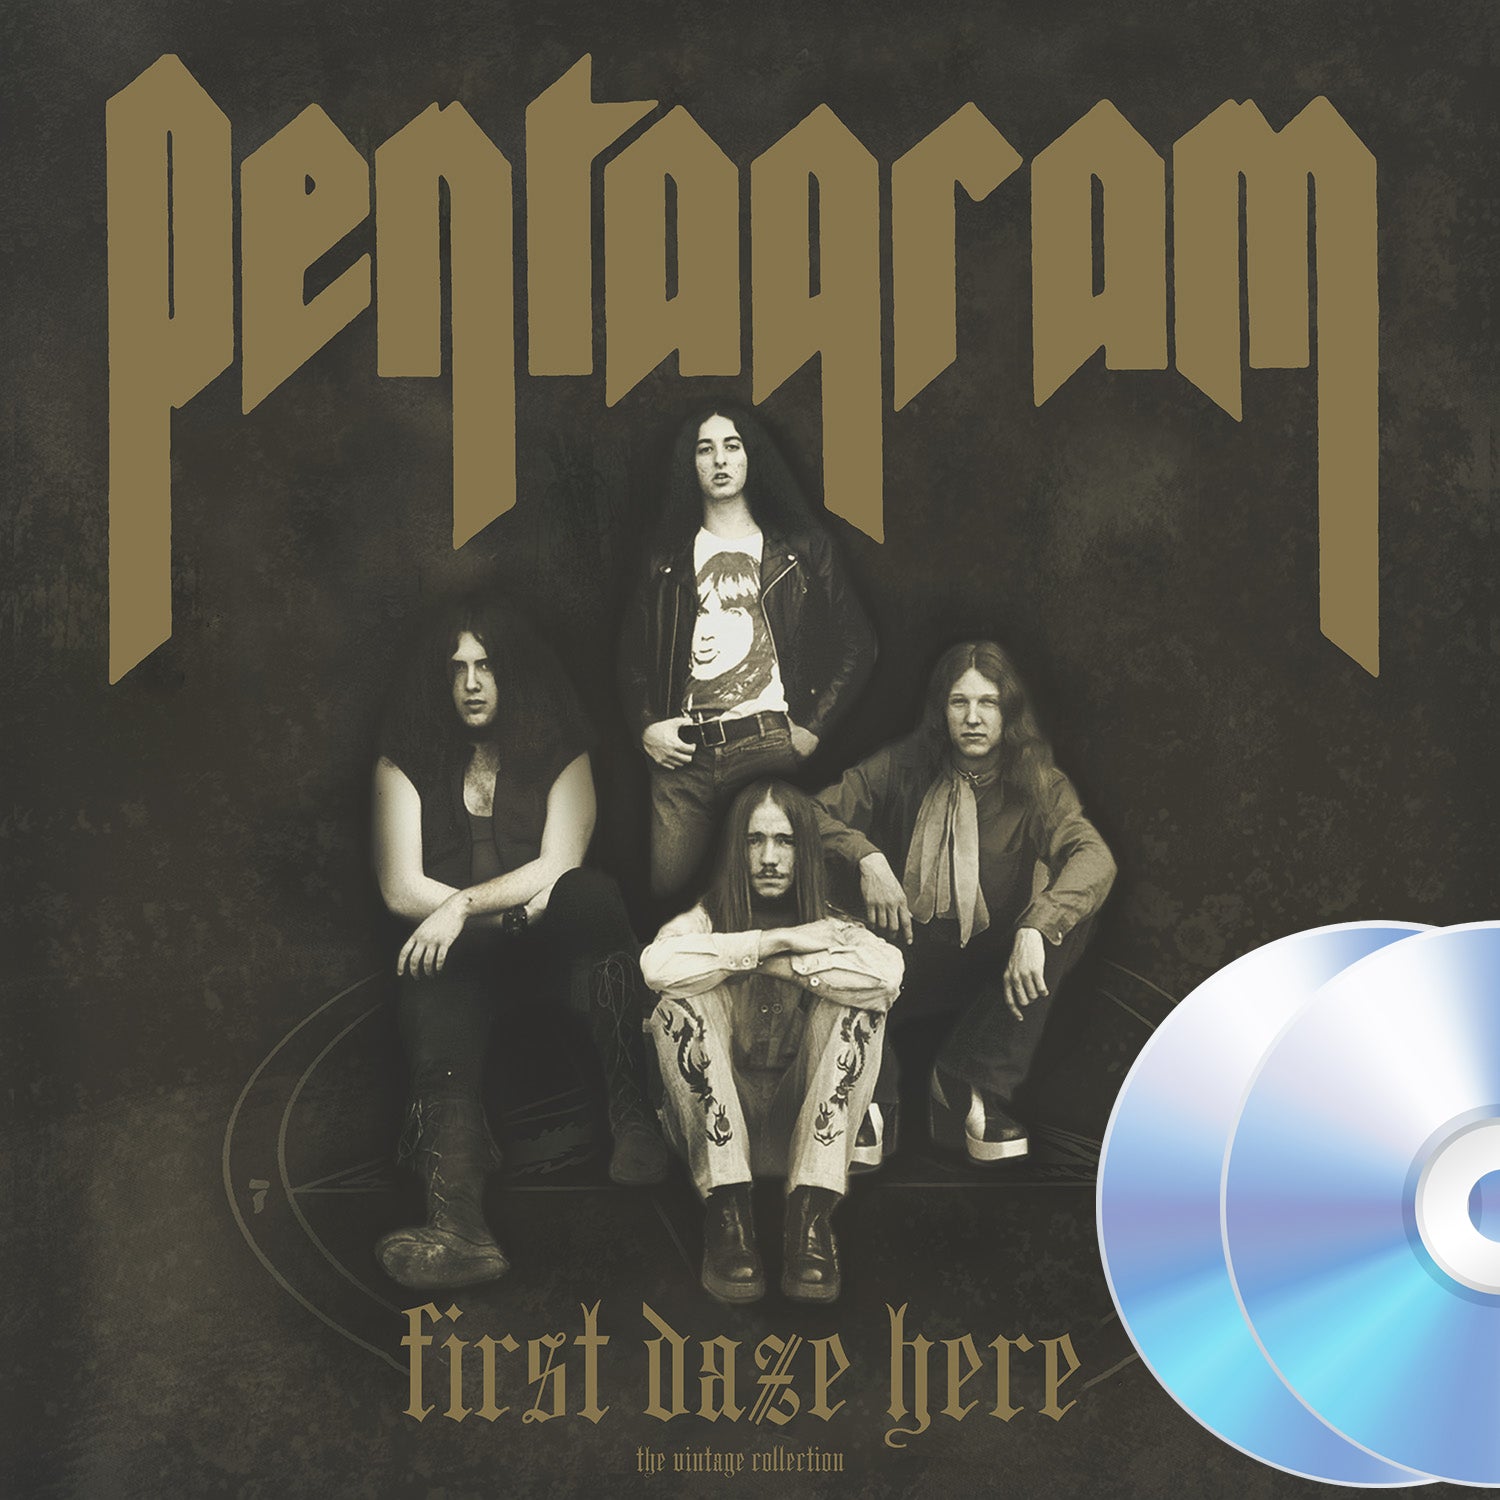 Pentagram "First Daze Here (Reissue)" 2xCD